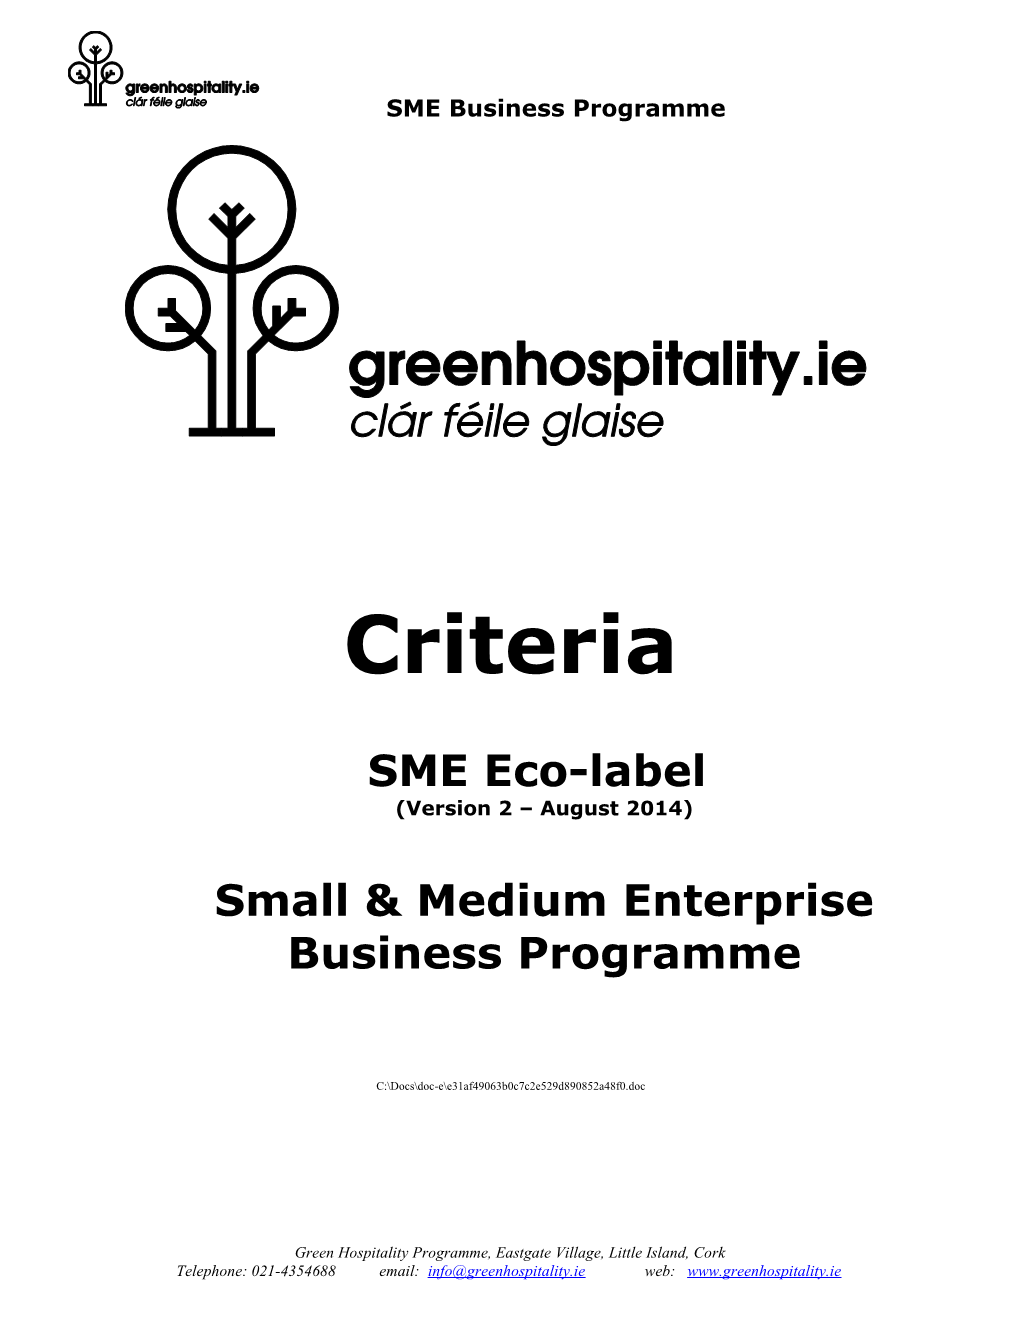 Small & Medium Enterprisebusiness Programme